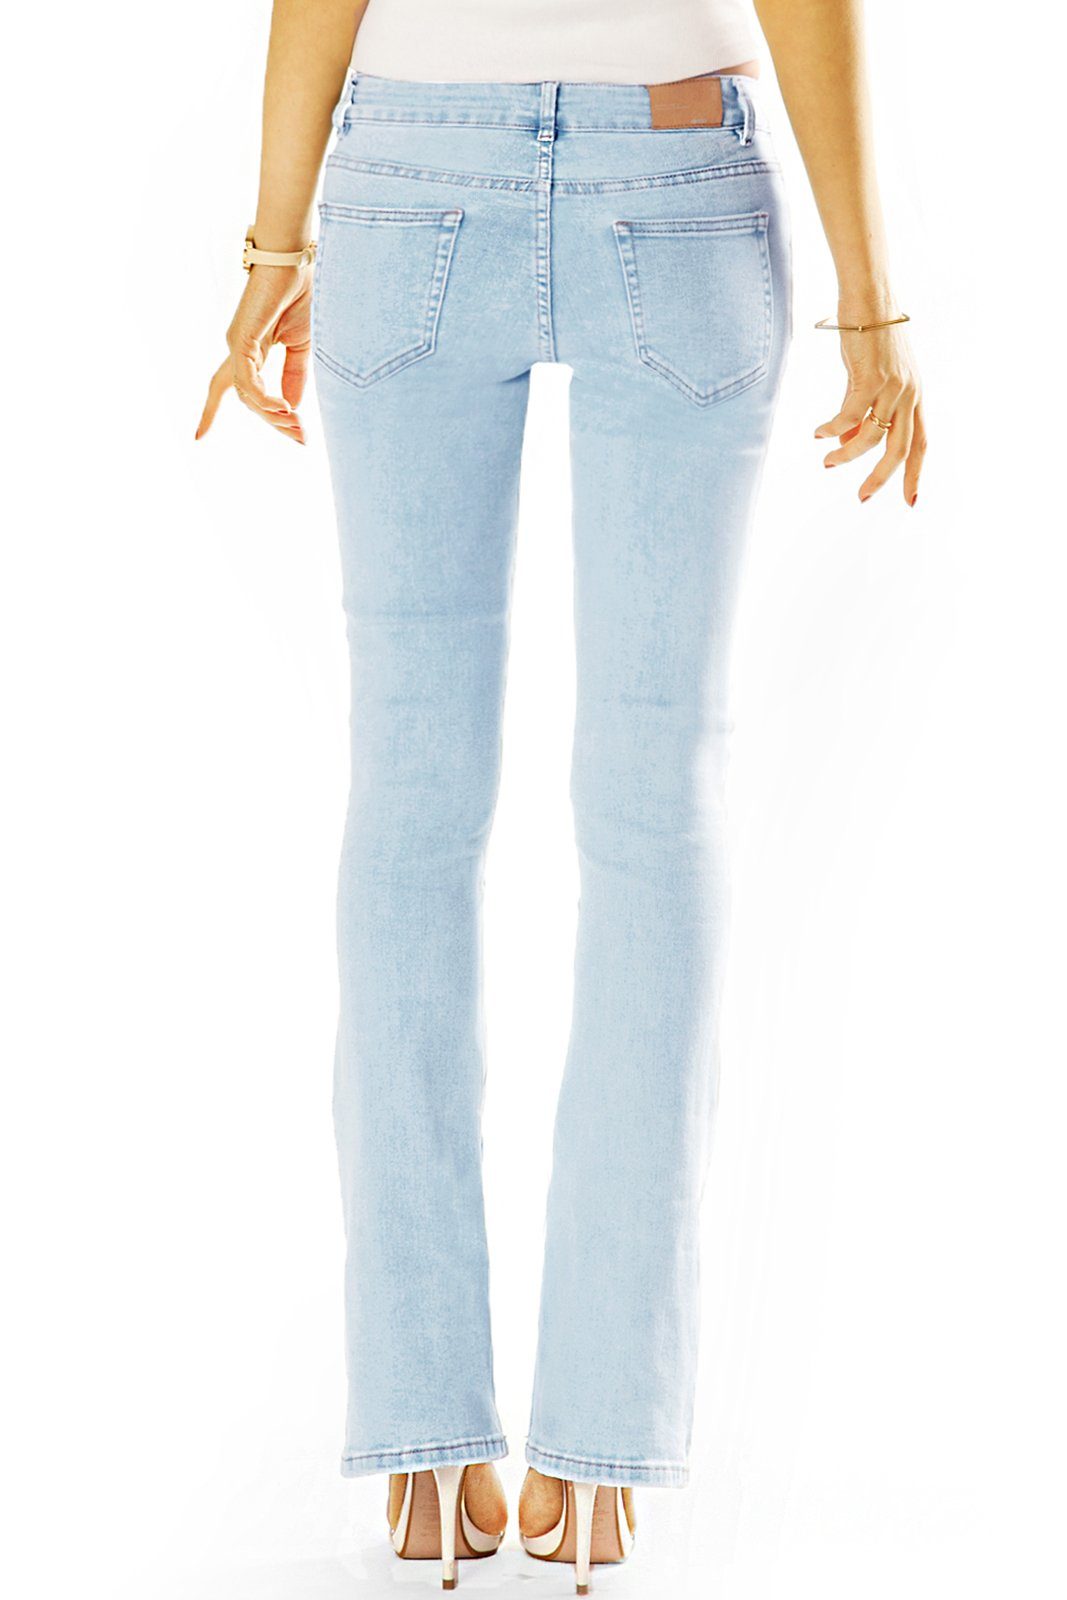 Hose styled Damen 5-Pocket-Style, j6l-1 - Bootcut-Jeans be Jeans Bootcut mit mit Schlagjeans - Stretch-Anteil Knopfleiste